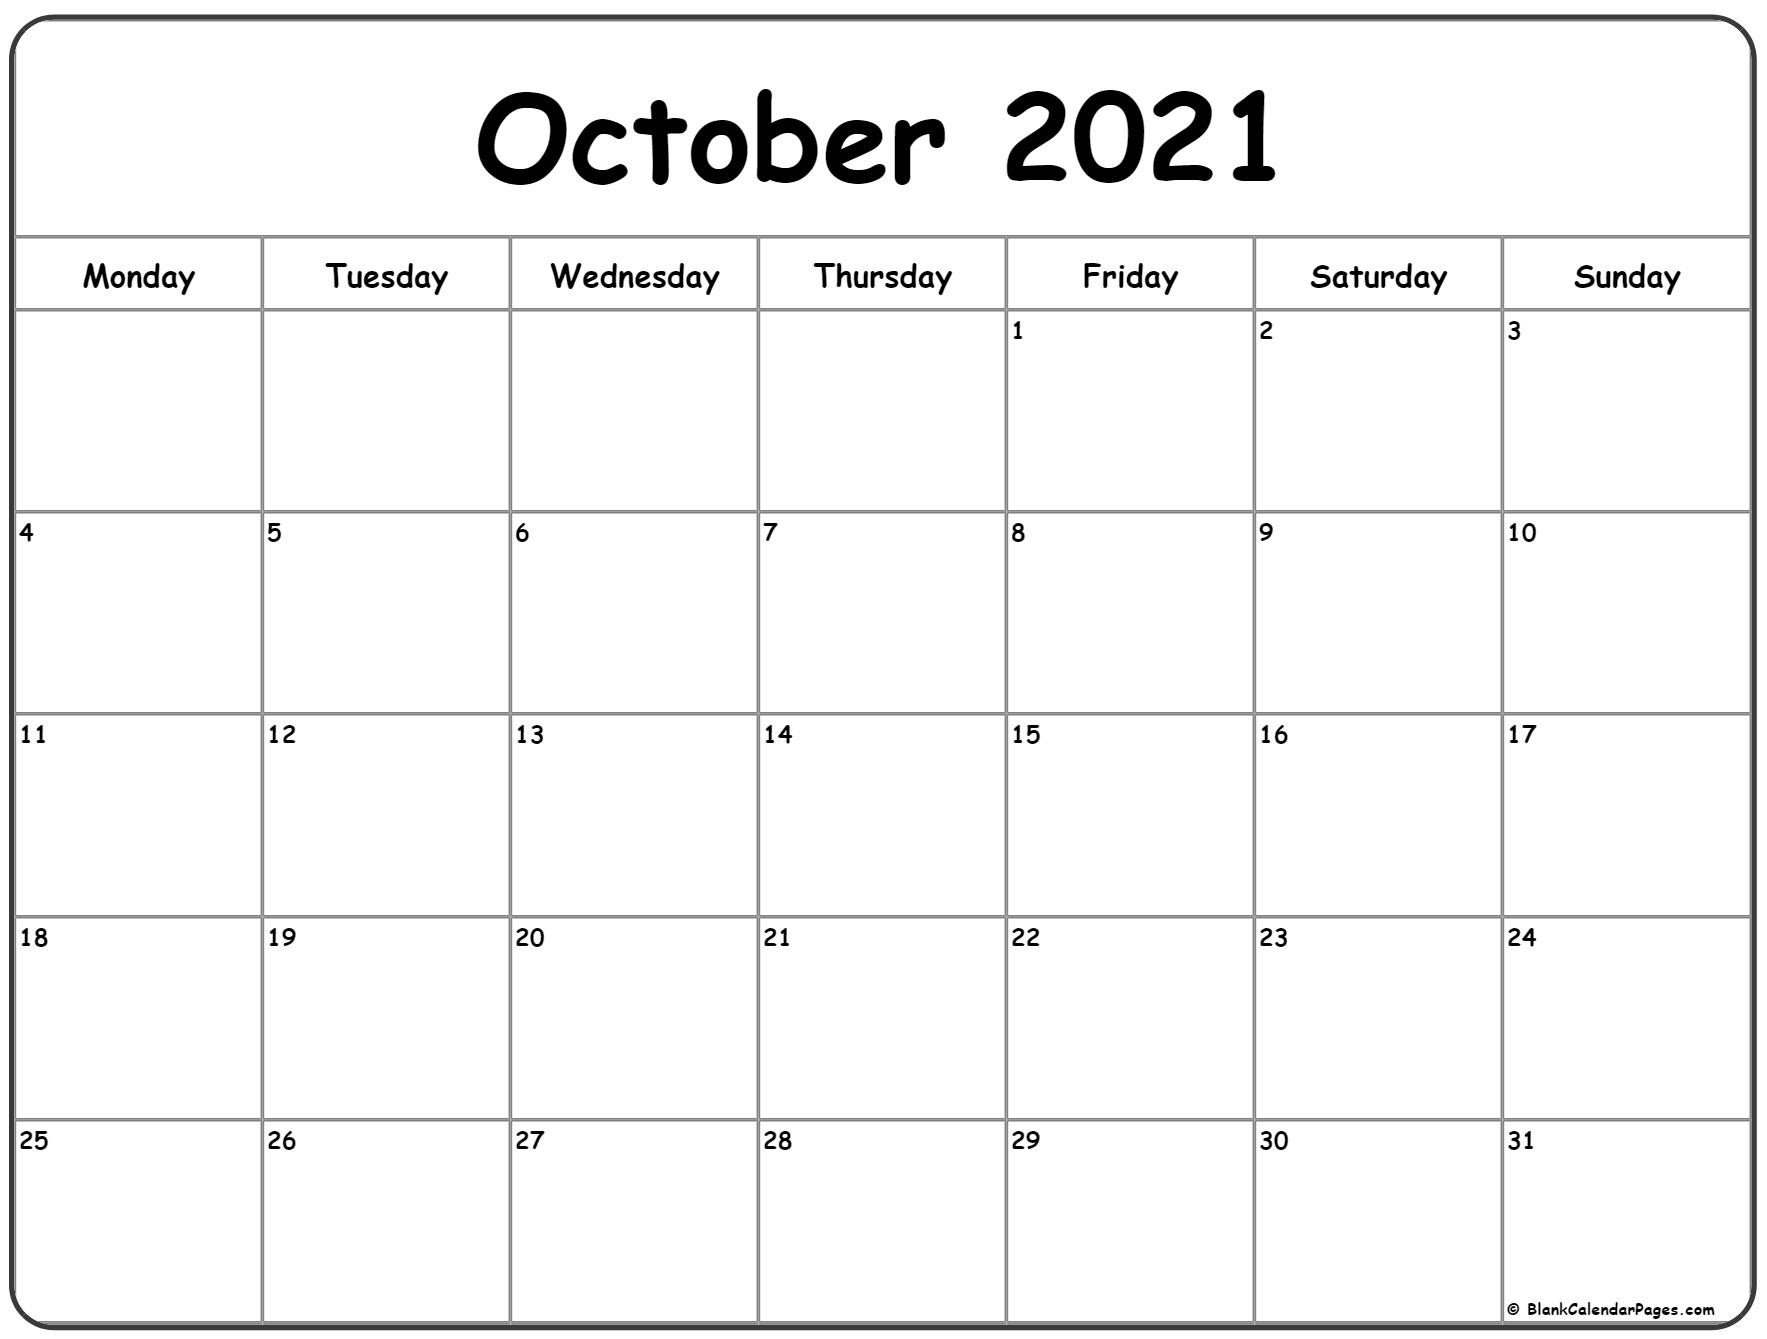 October 2021 Monday Calendar | Monday To Sunday-Blank Monday Through Friday Schedule For 2021